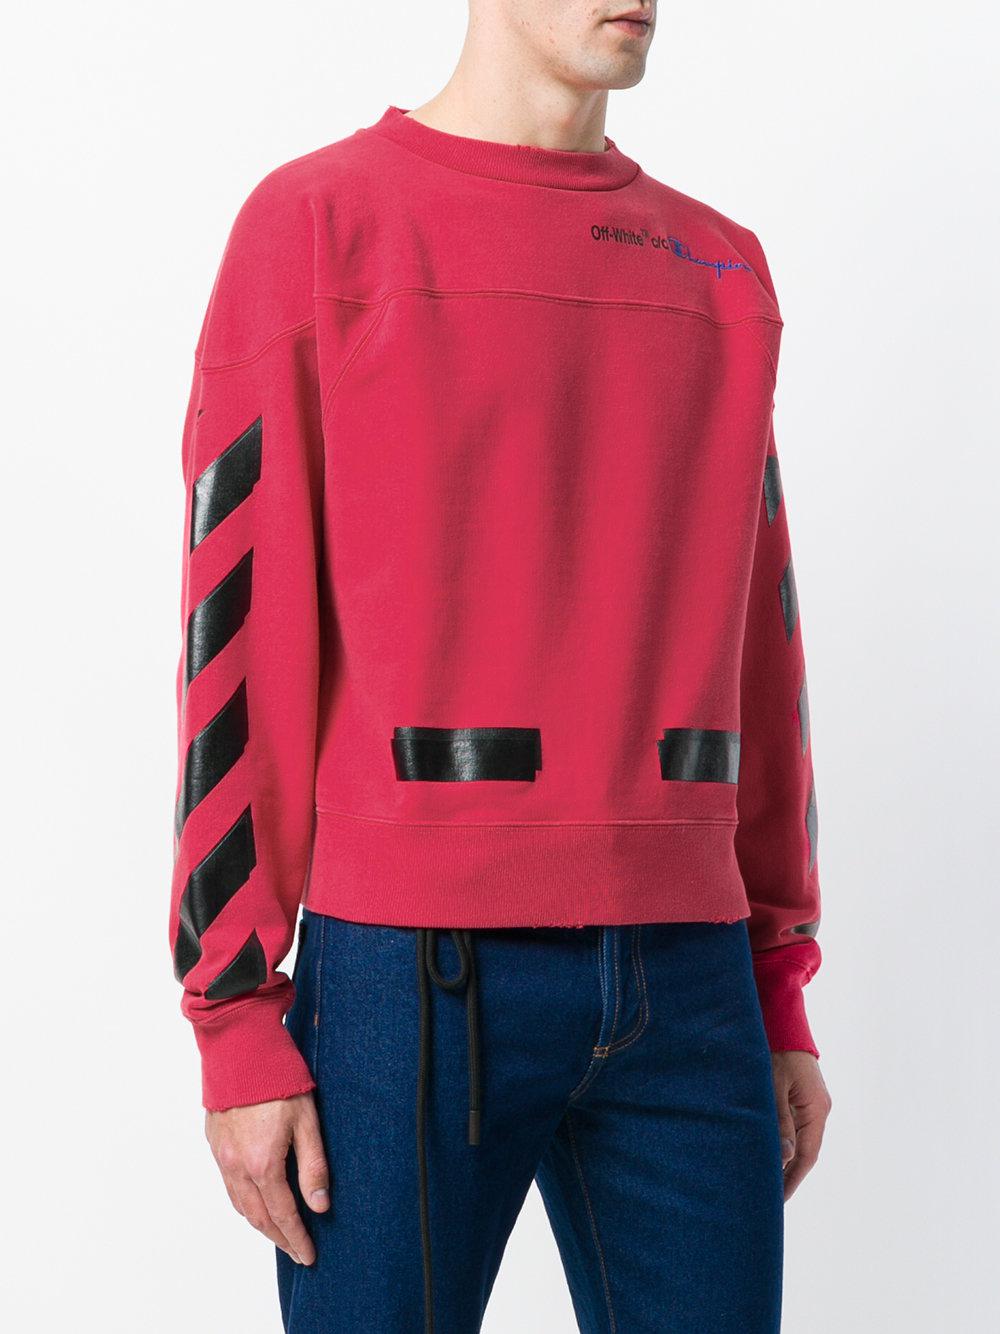 Off-White c/o Virgil Abloh Champion Tape Detail Sweatshirt in Red